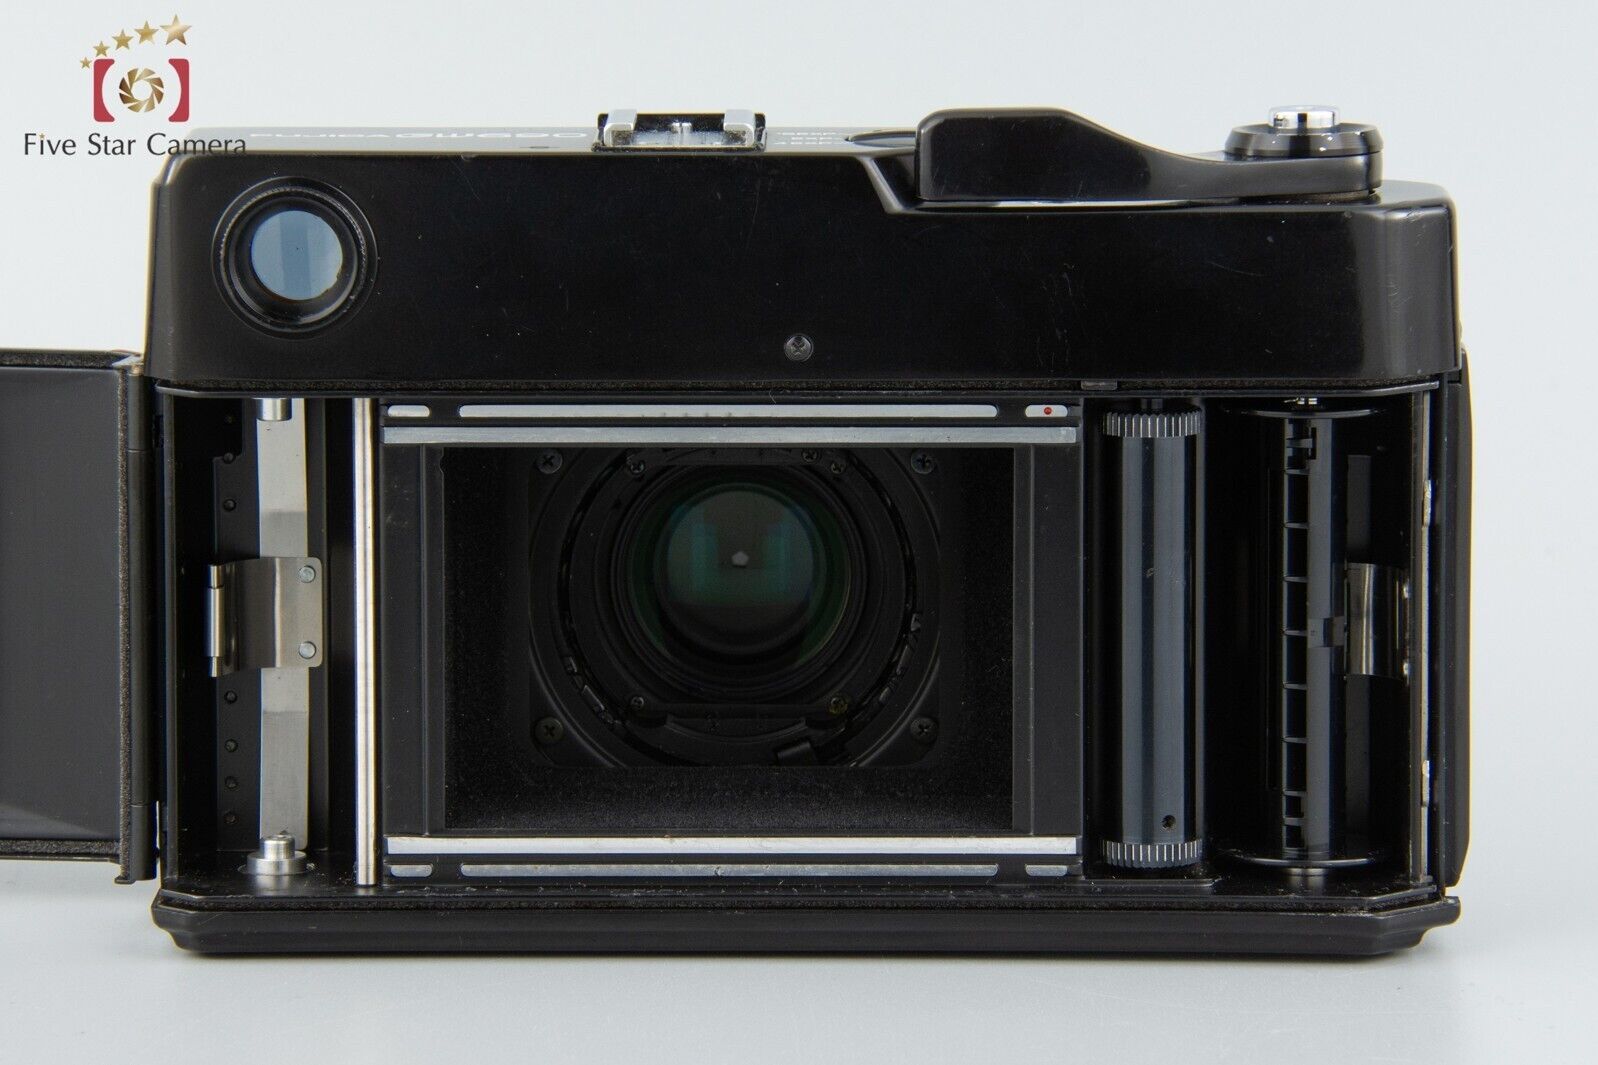 Fujifilm FUJICA GW690 Pro 6x9 Medium Format Rangefinder Film Camera